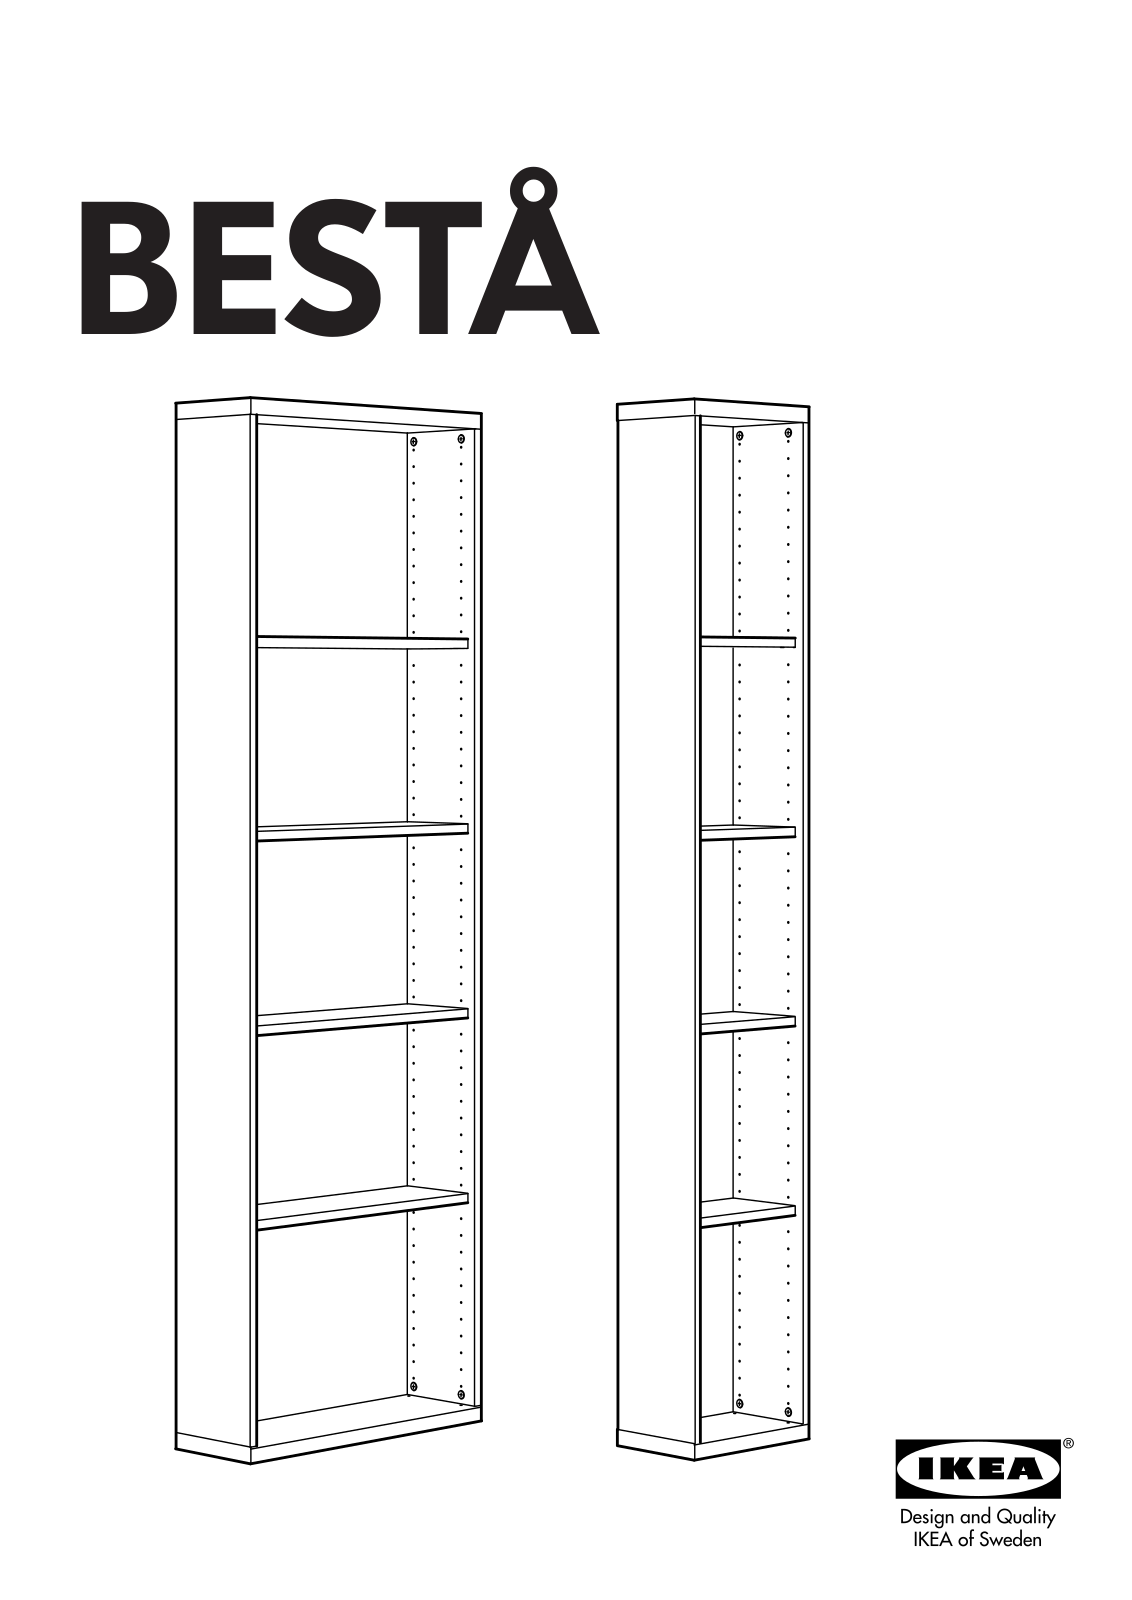 IKEA BESTÃ SHELF UNIT 76  TALL Assembly Instruction